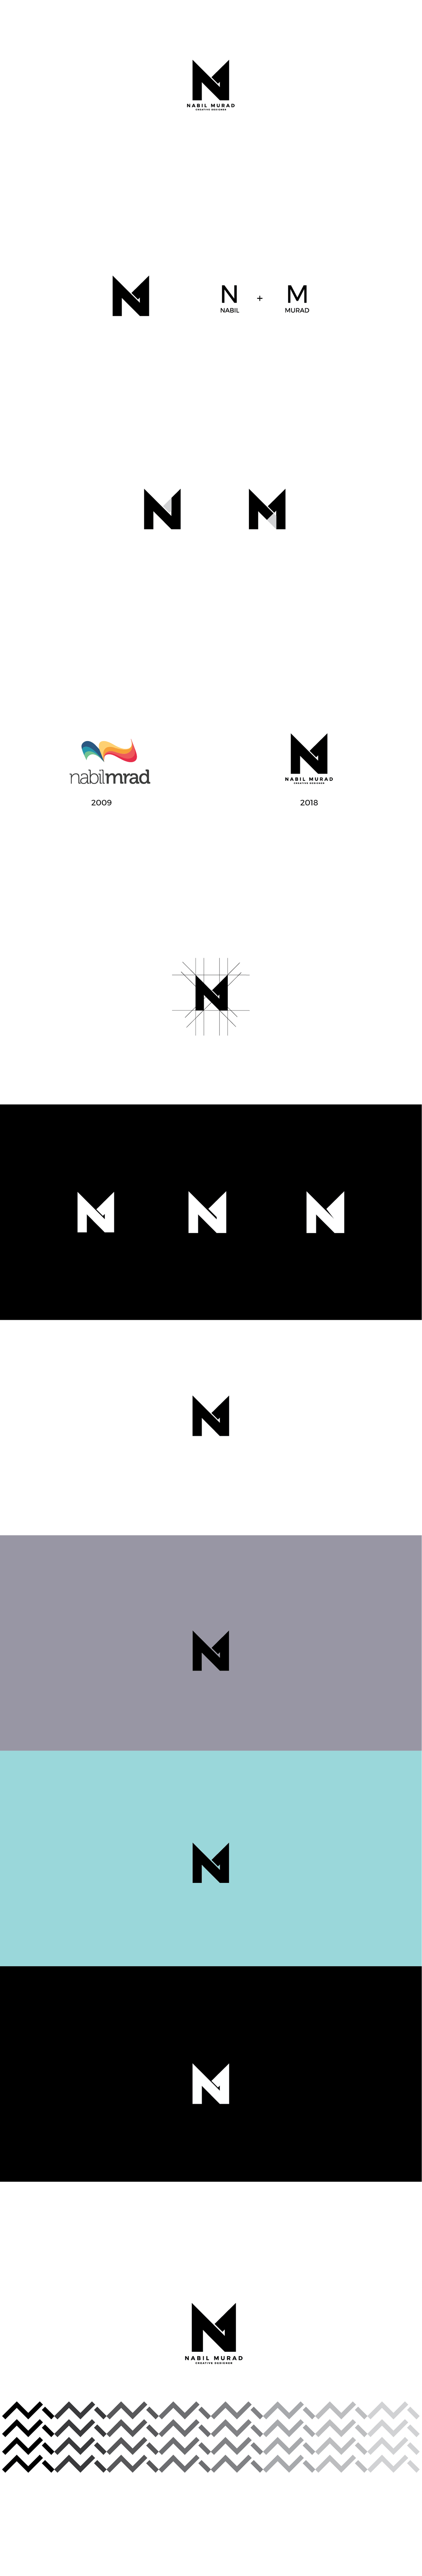 Murad Logo - Nabil Murad Logo